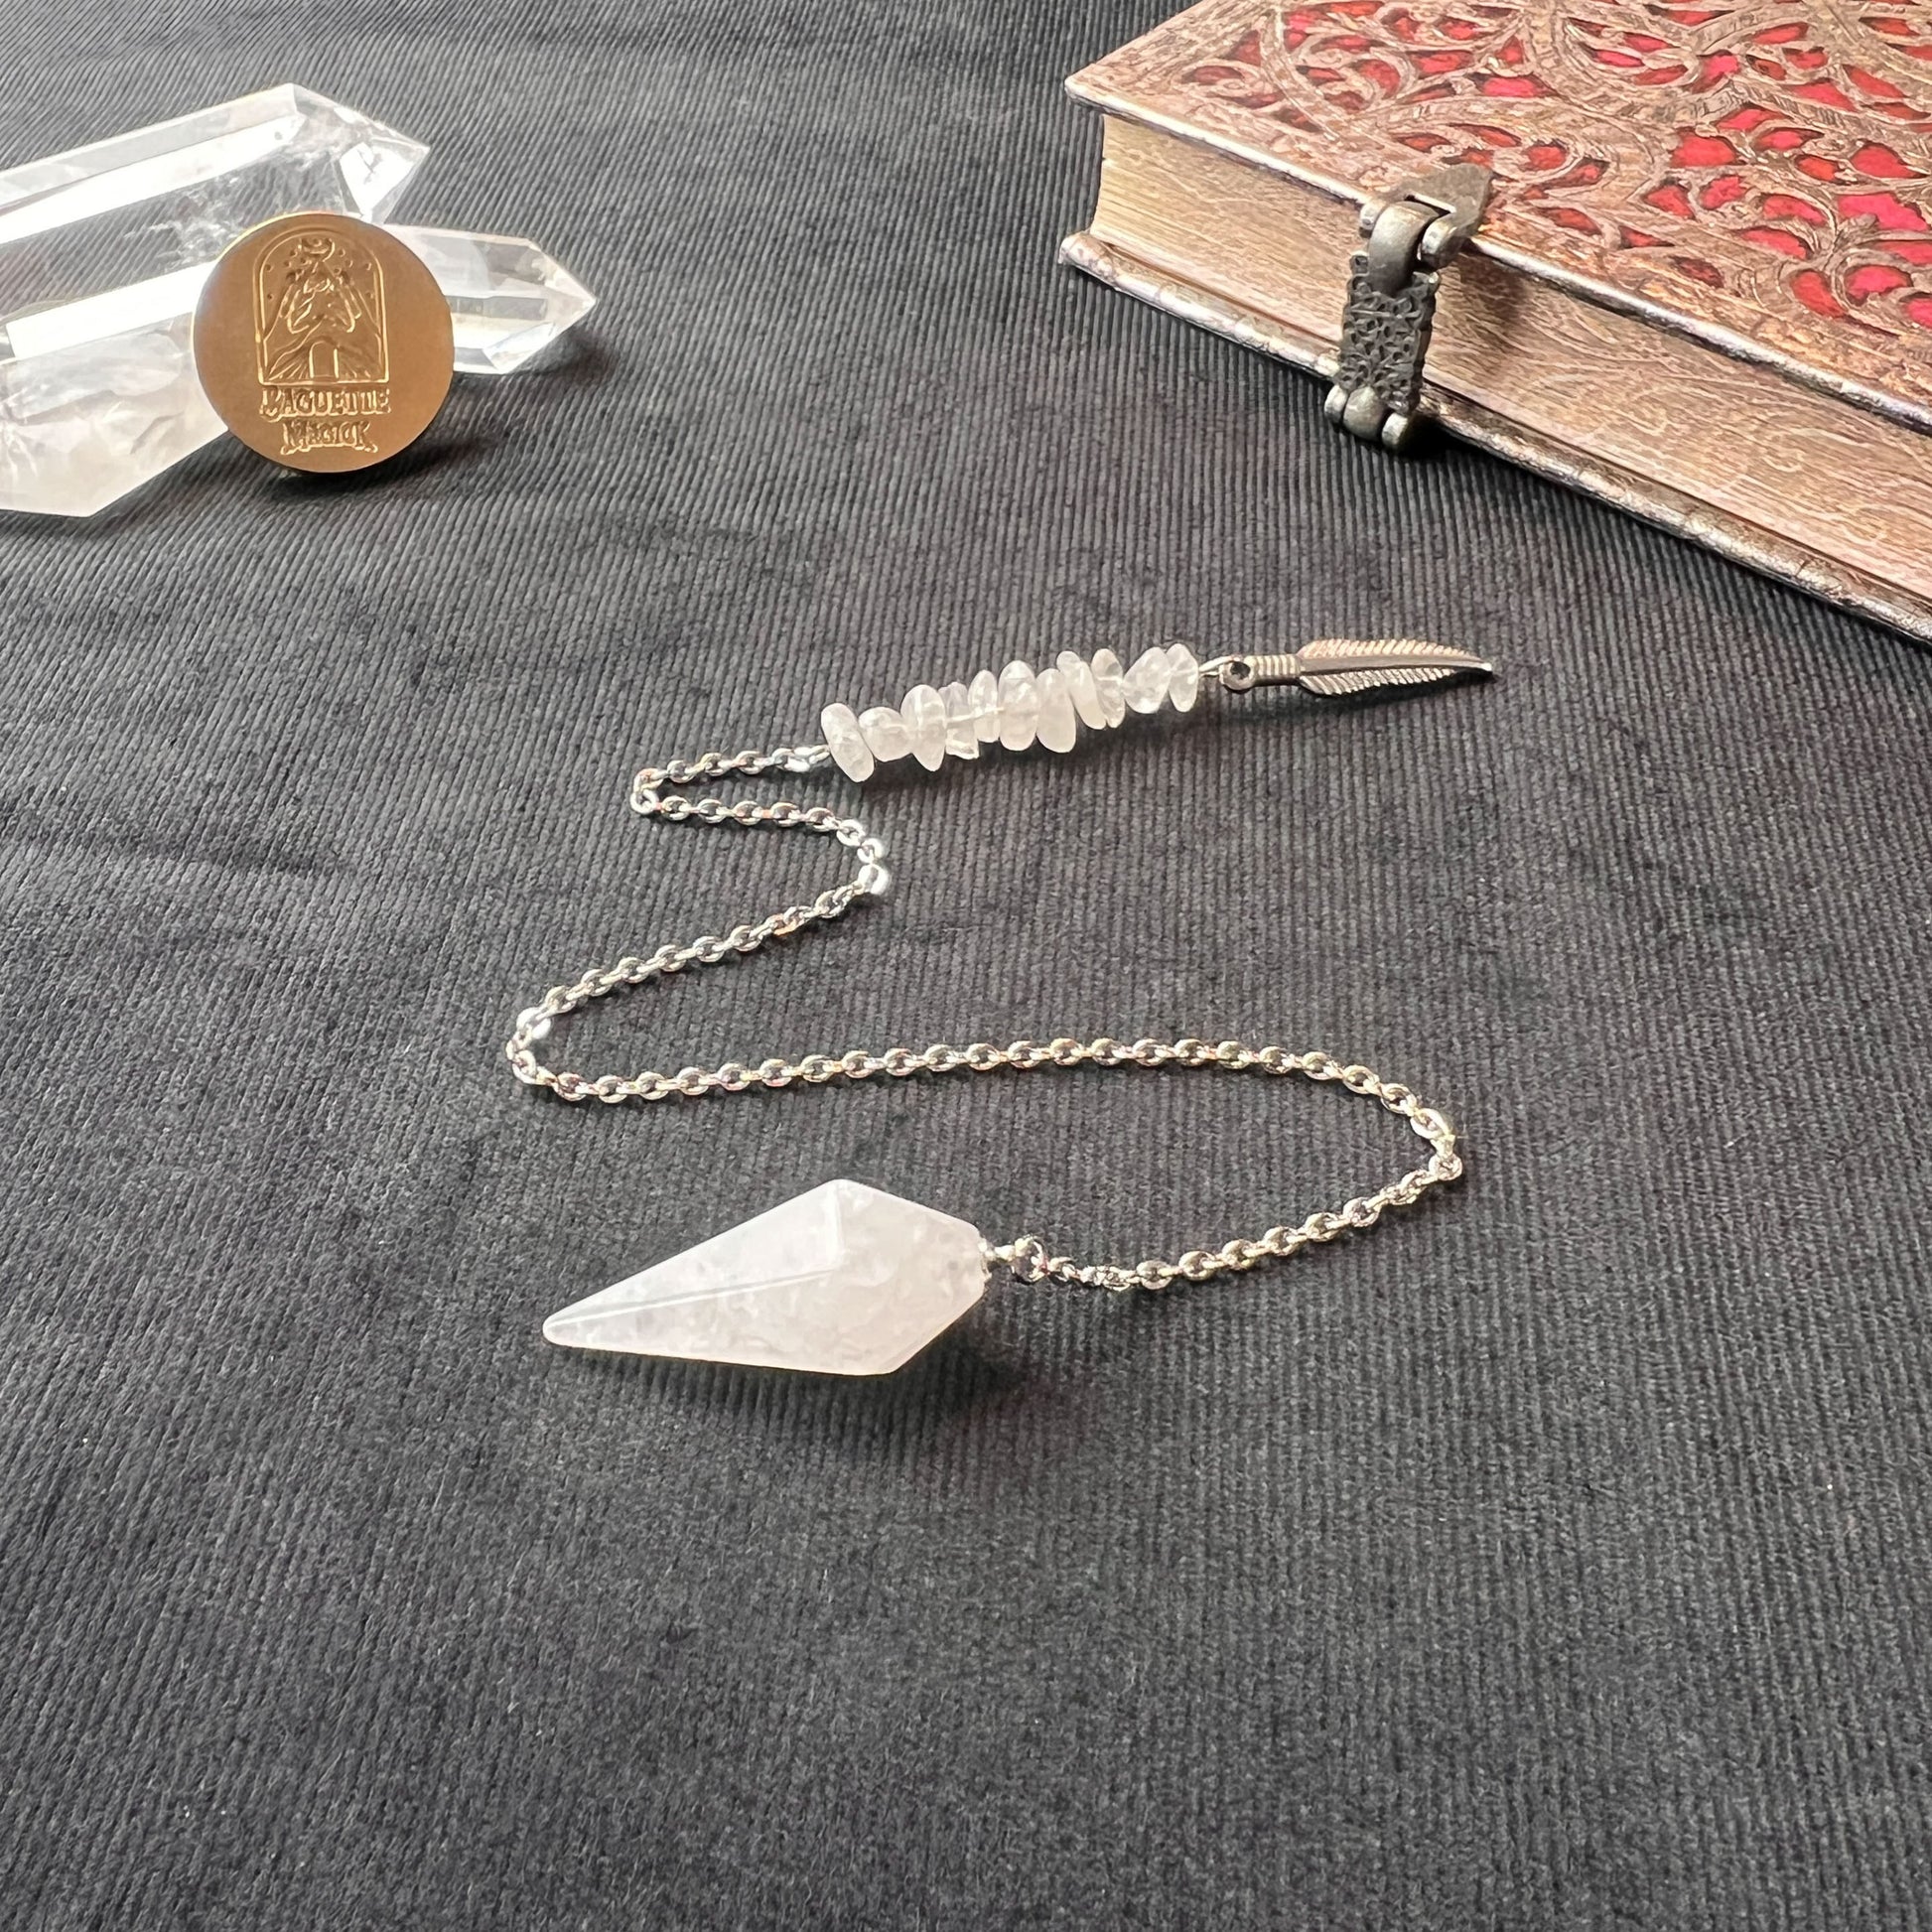 clear quartz gemstone crystal dowsing pendulum feather charm witchcraft altar pagan tool baguette magick